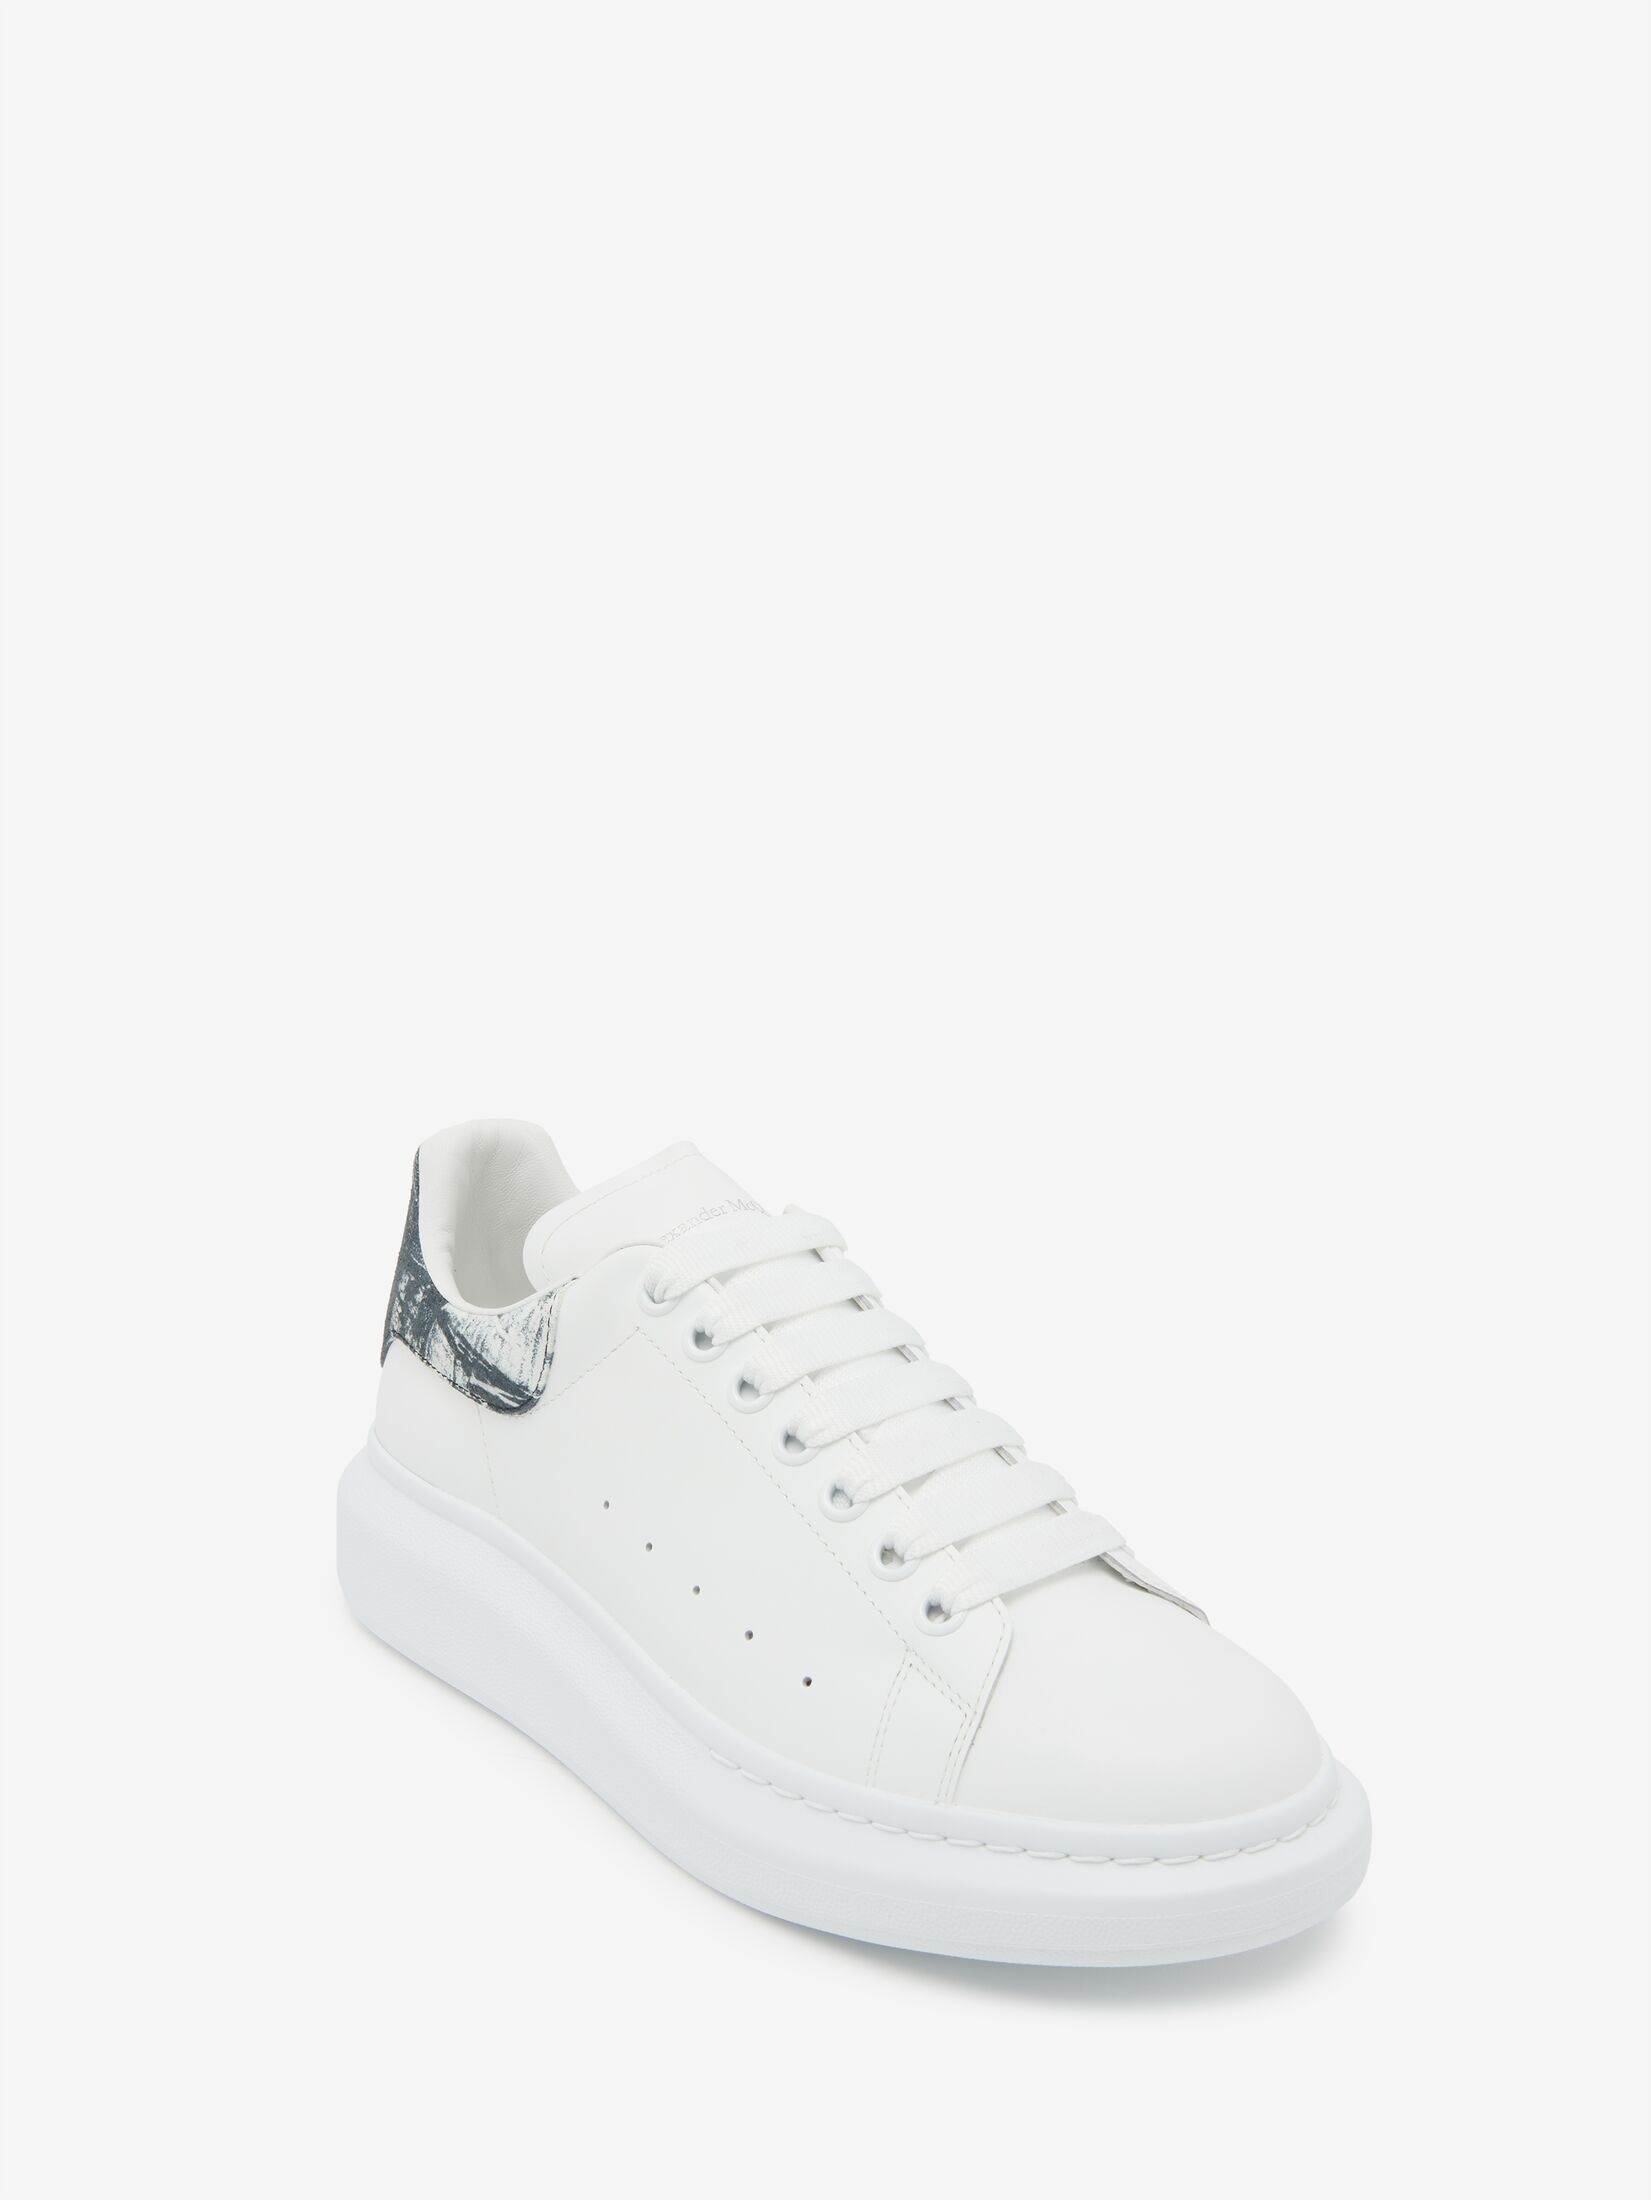 Men's Oversized Sneaker in White/black - 4